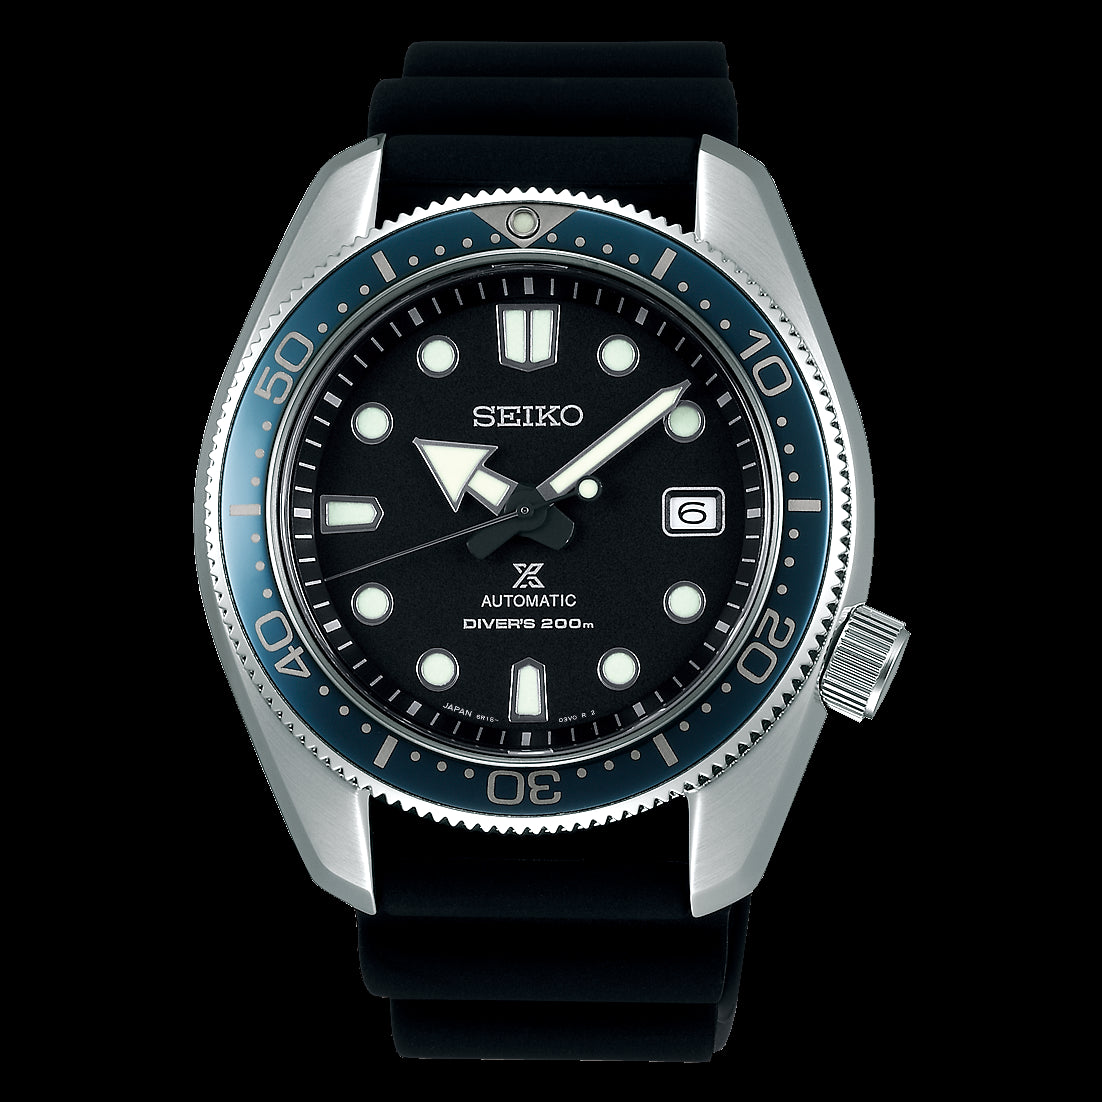 The Seiko SPB079 Prospex Dive Watch